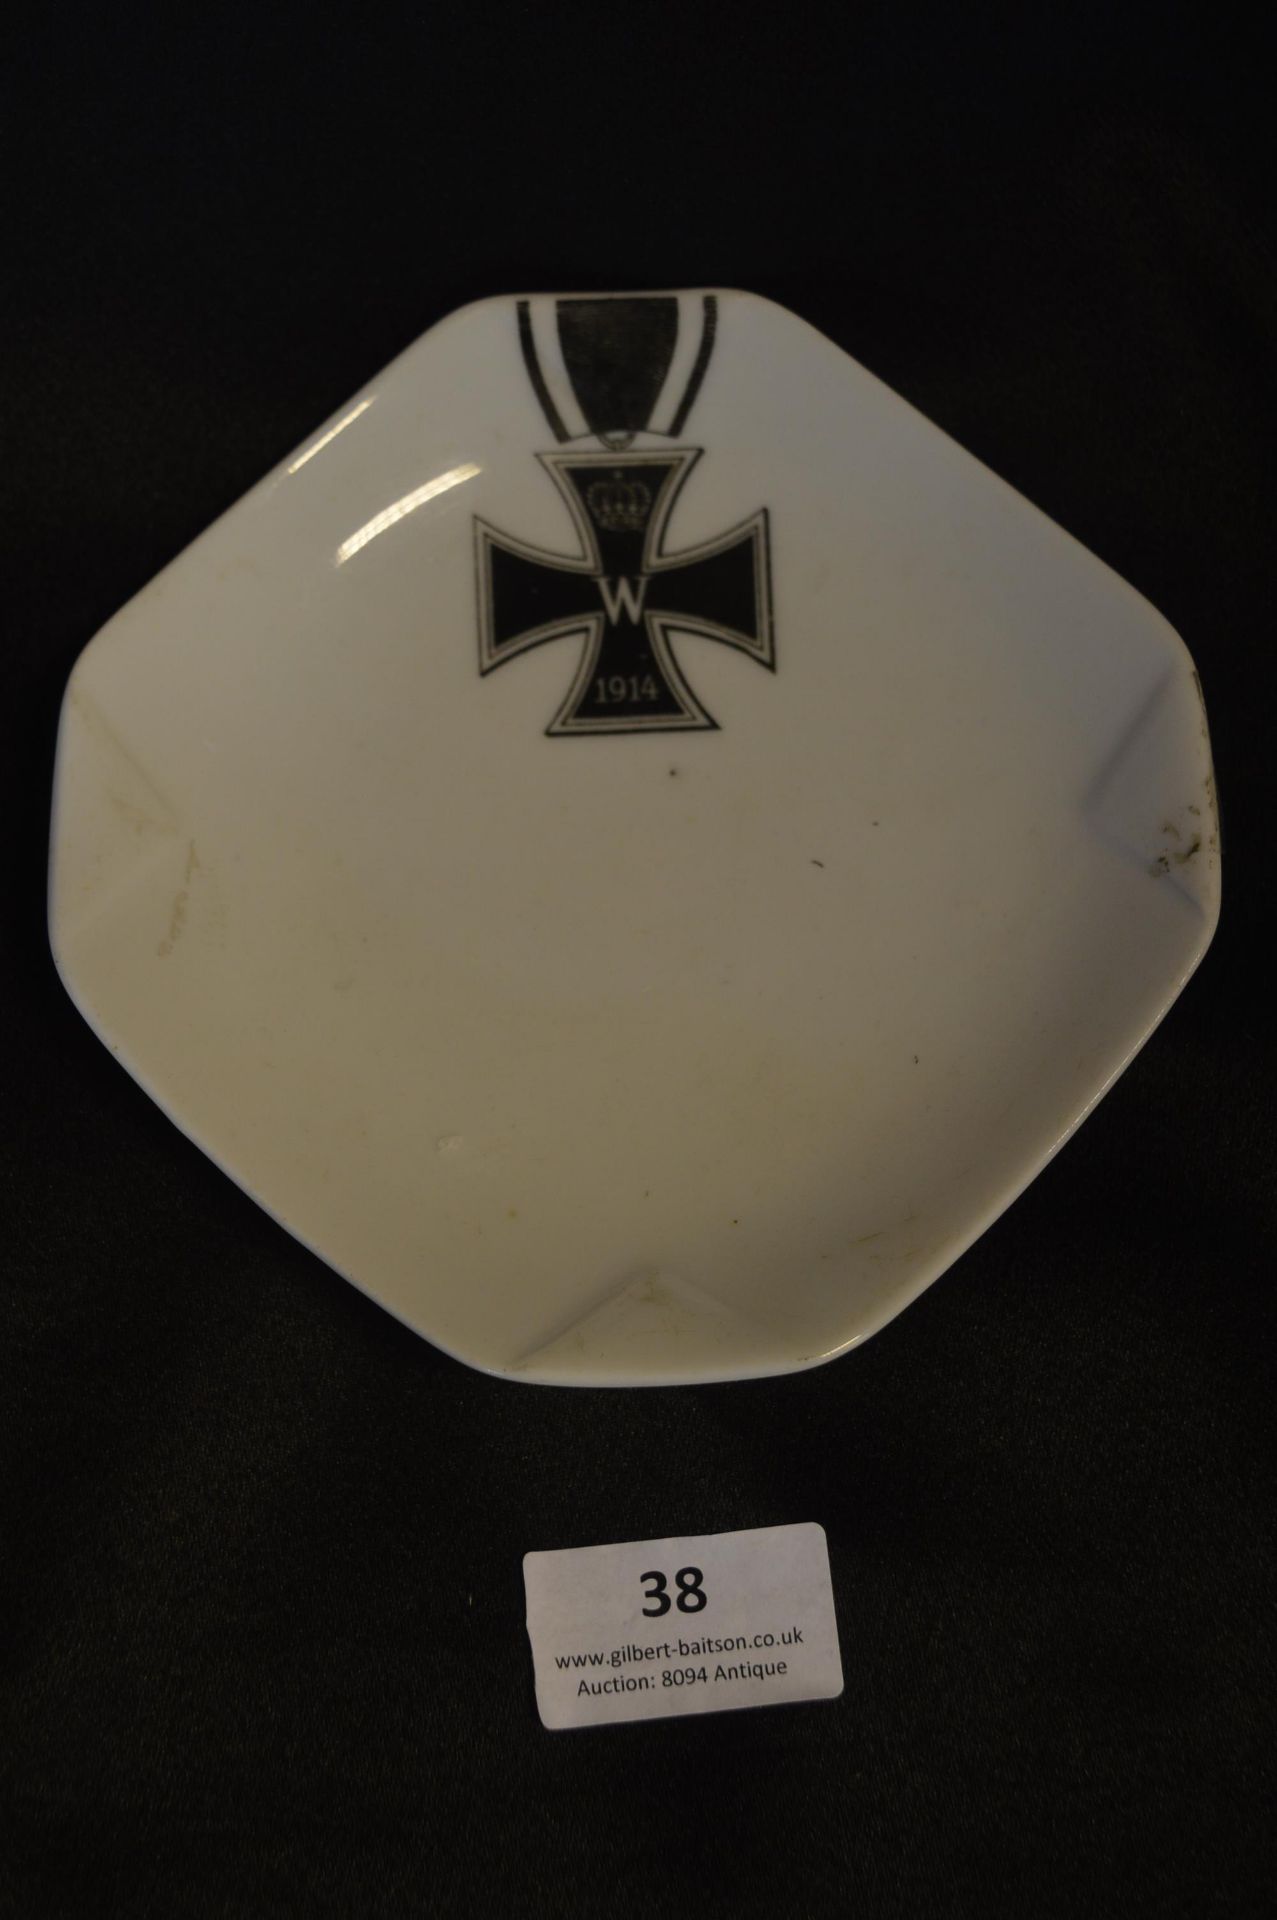 Kaiser Wilhelm 1914 Iron Cross Pin Dish